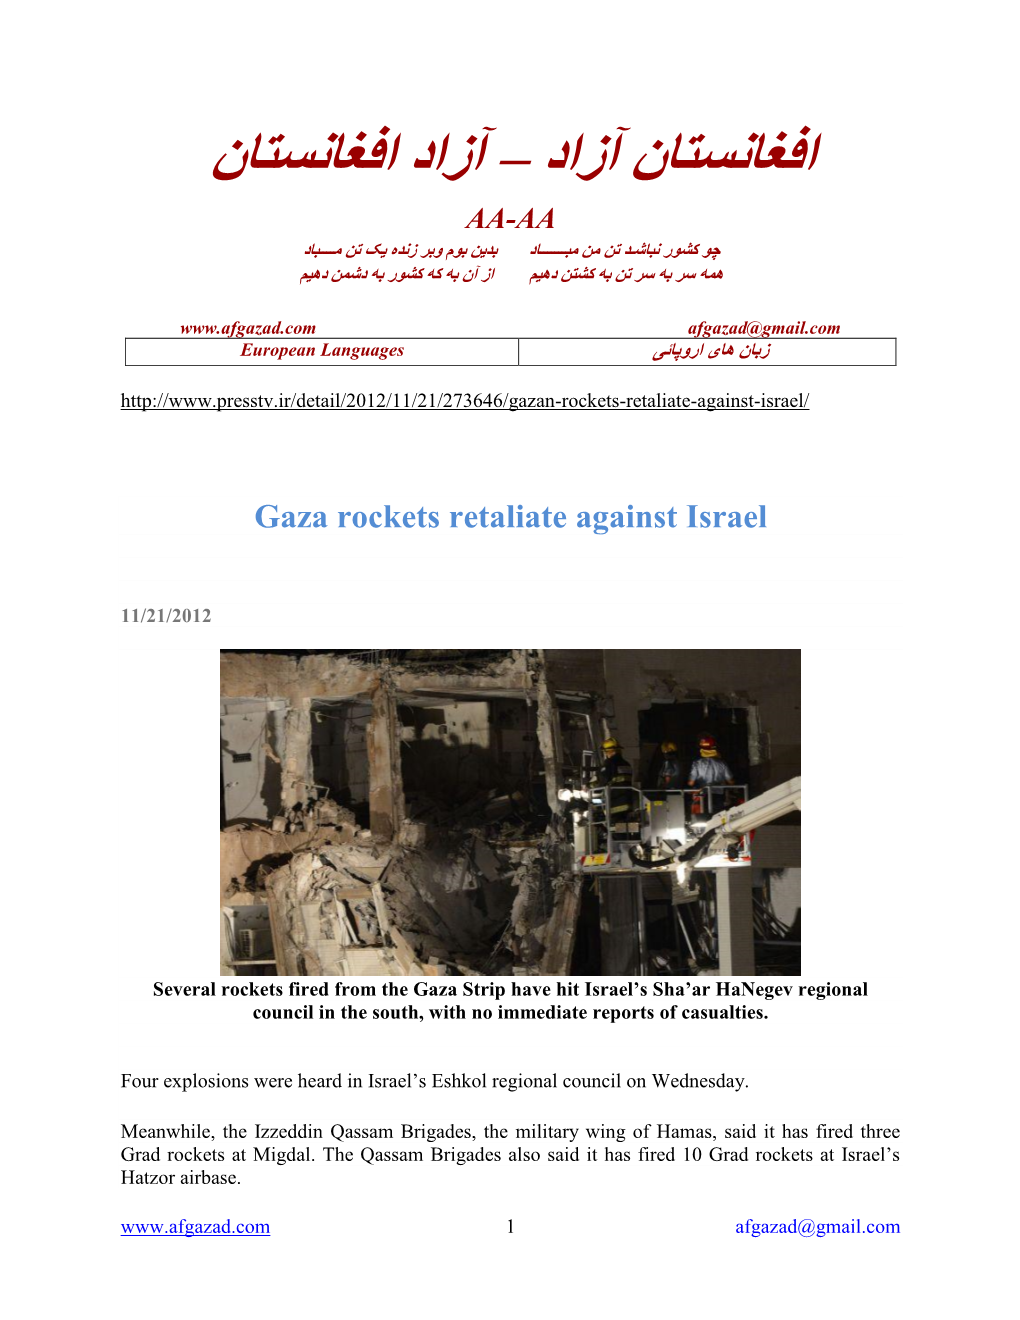 Gaza Rockets Retaliate Against Israel